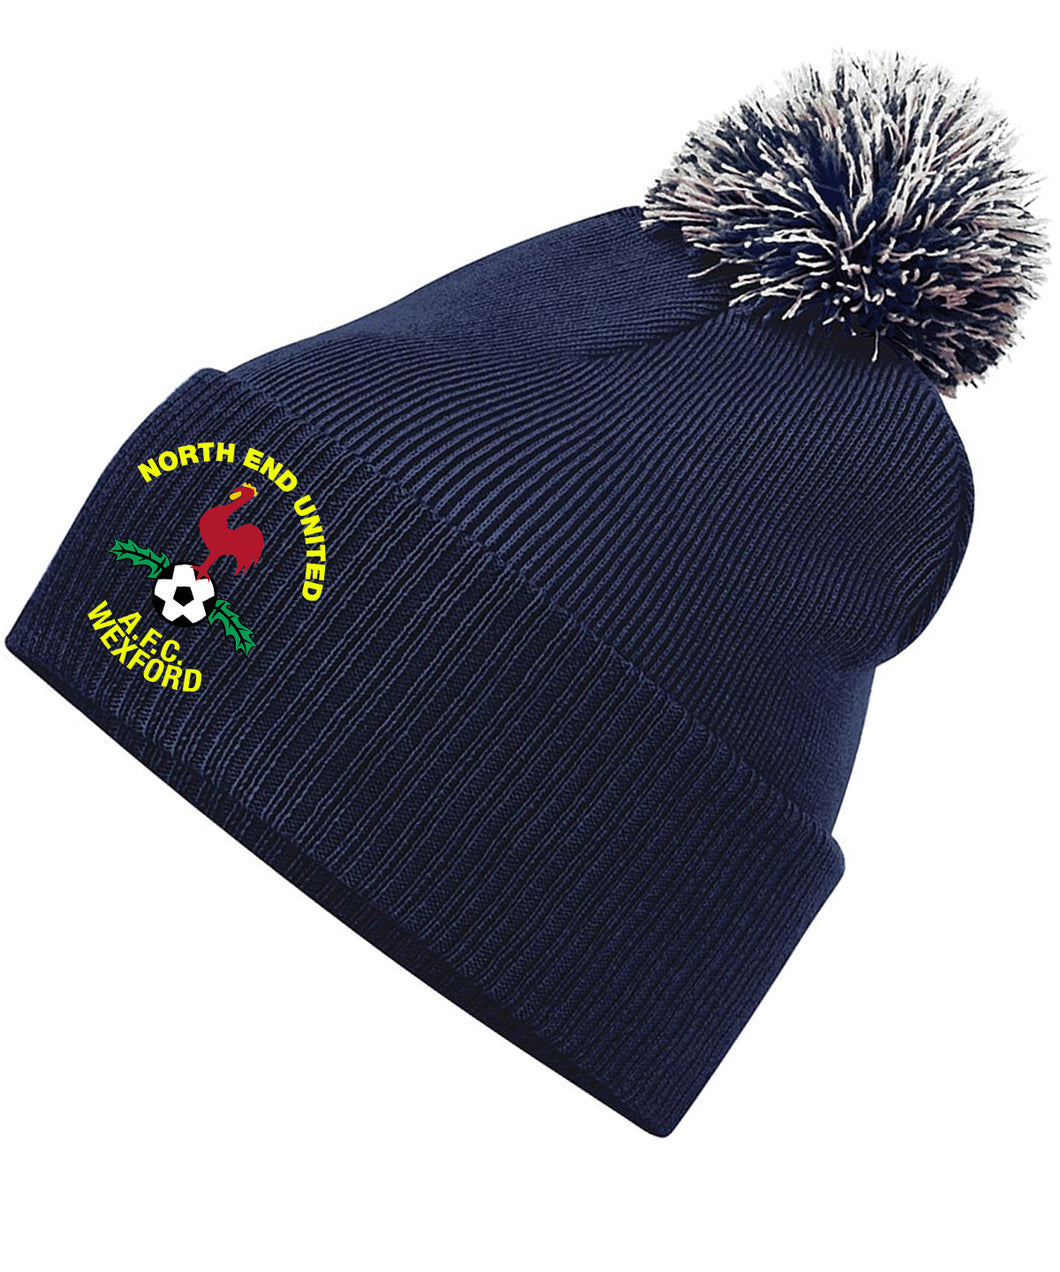 JAKO Northend United AFC Bobble Hat NE450